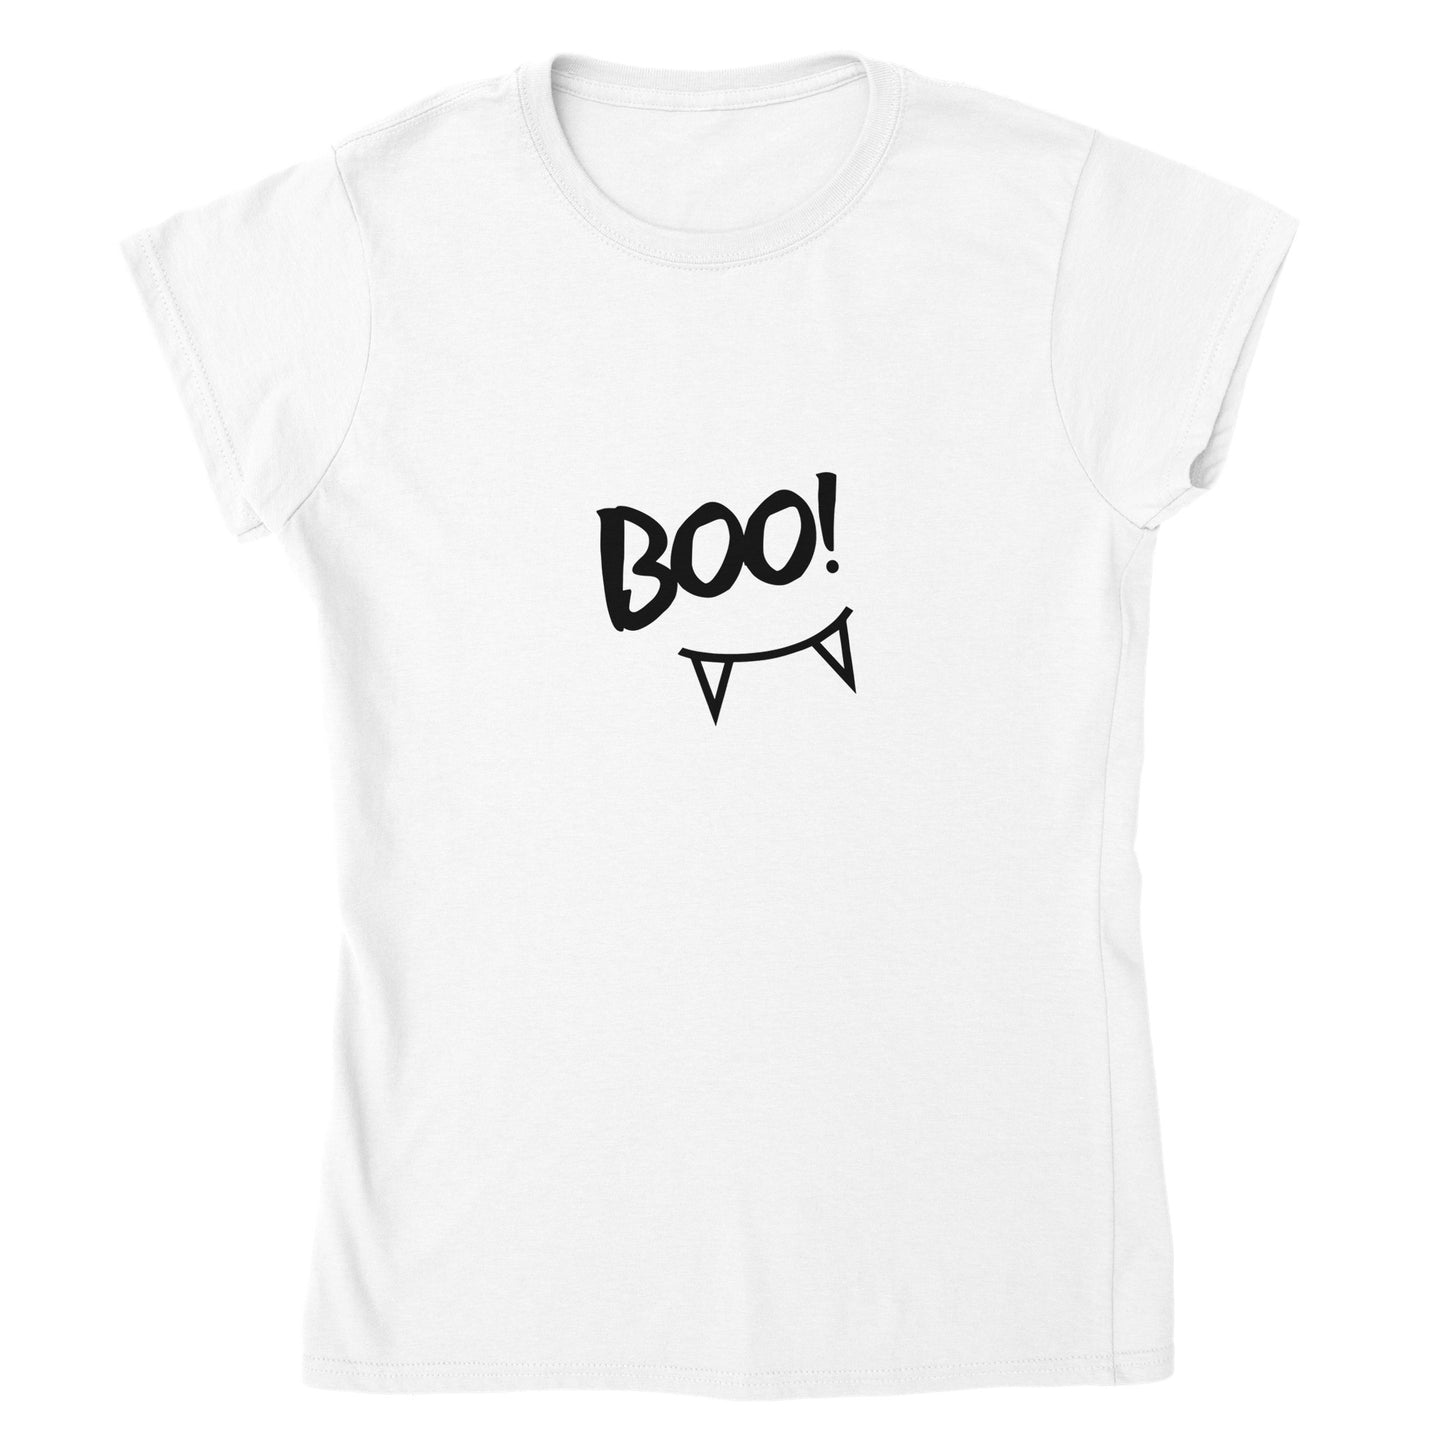 Boo! - Classic Womens Crewneck T-shirt